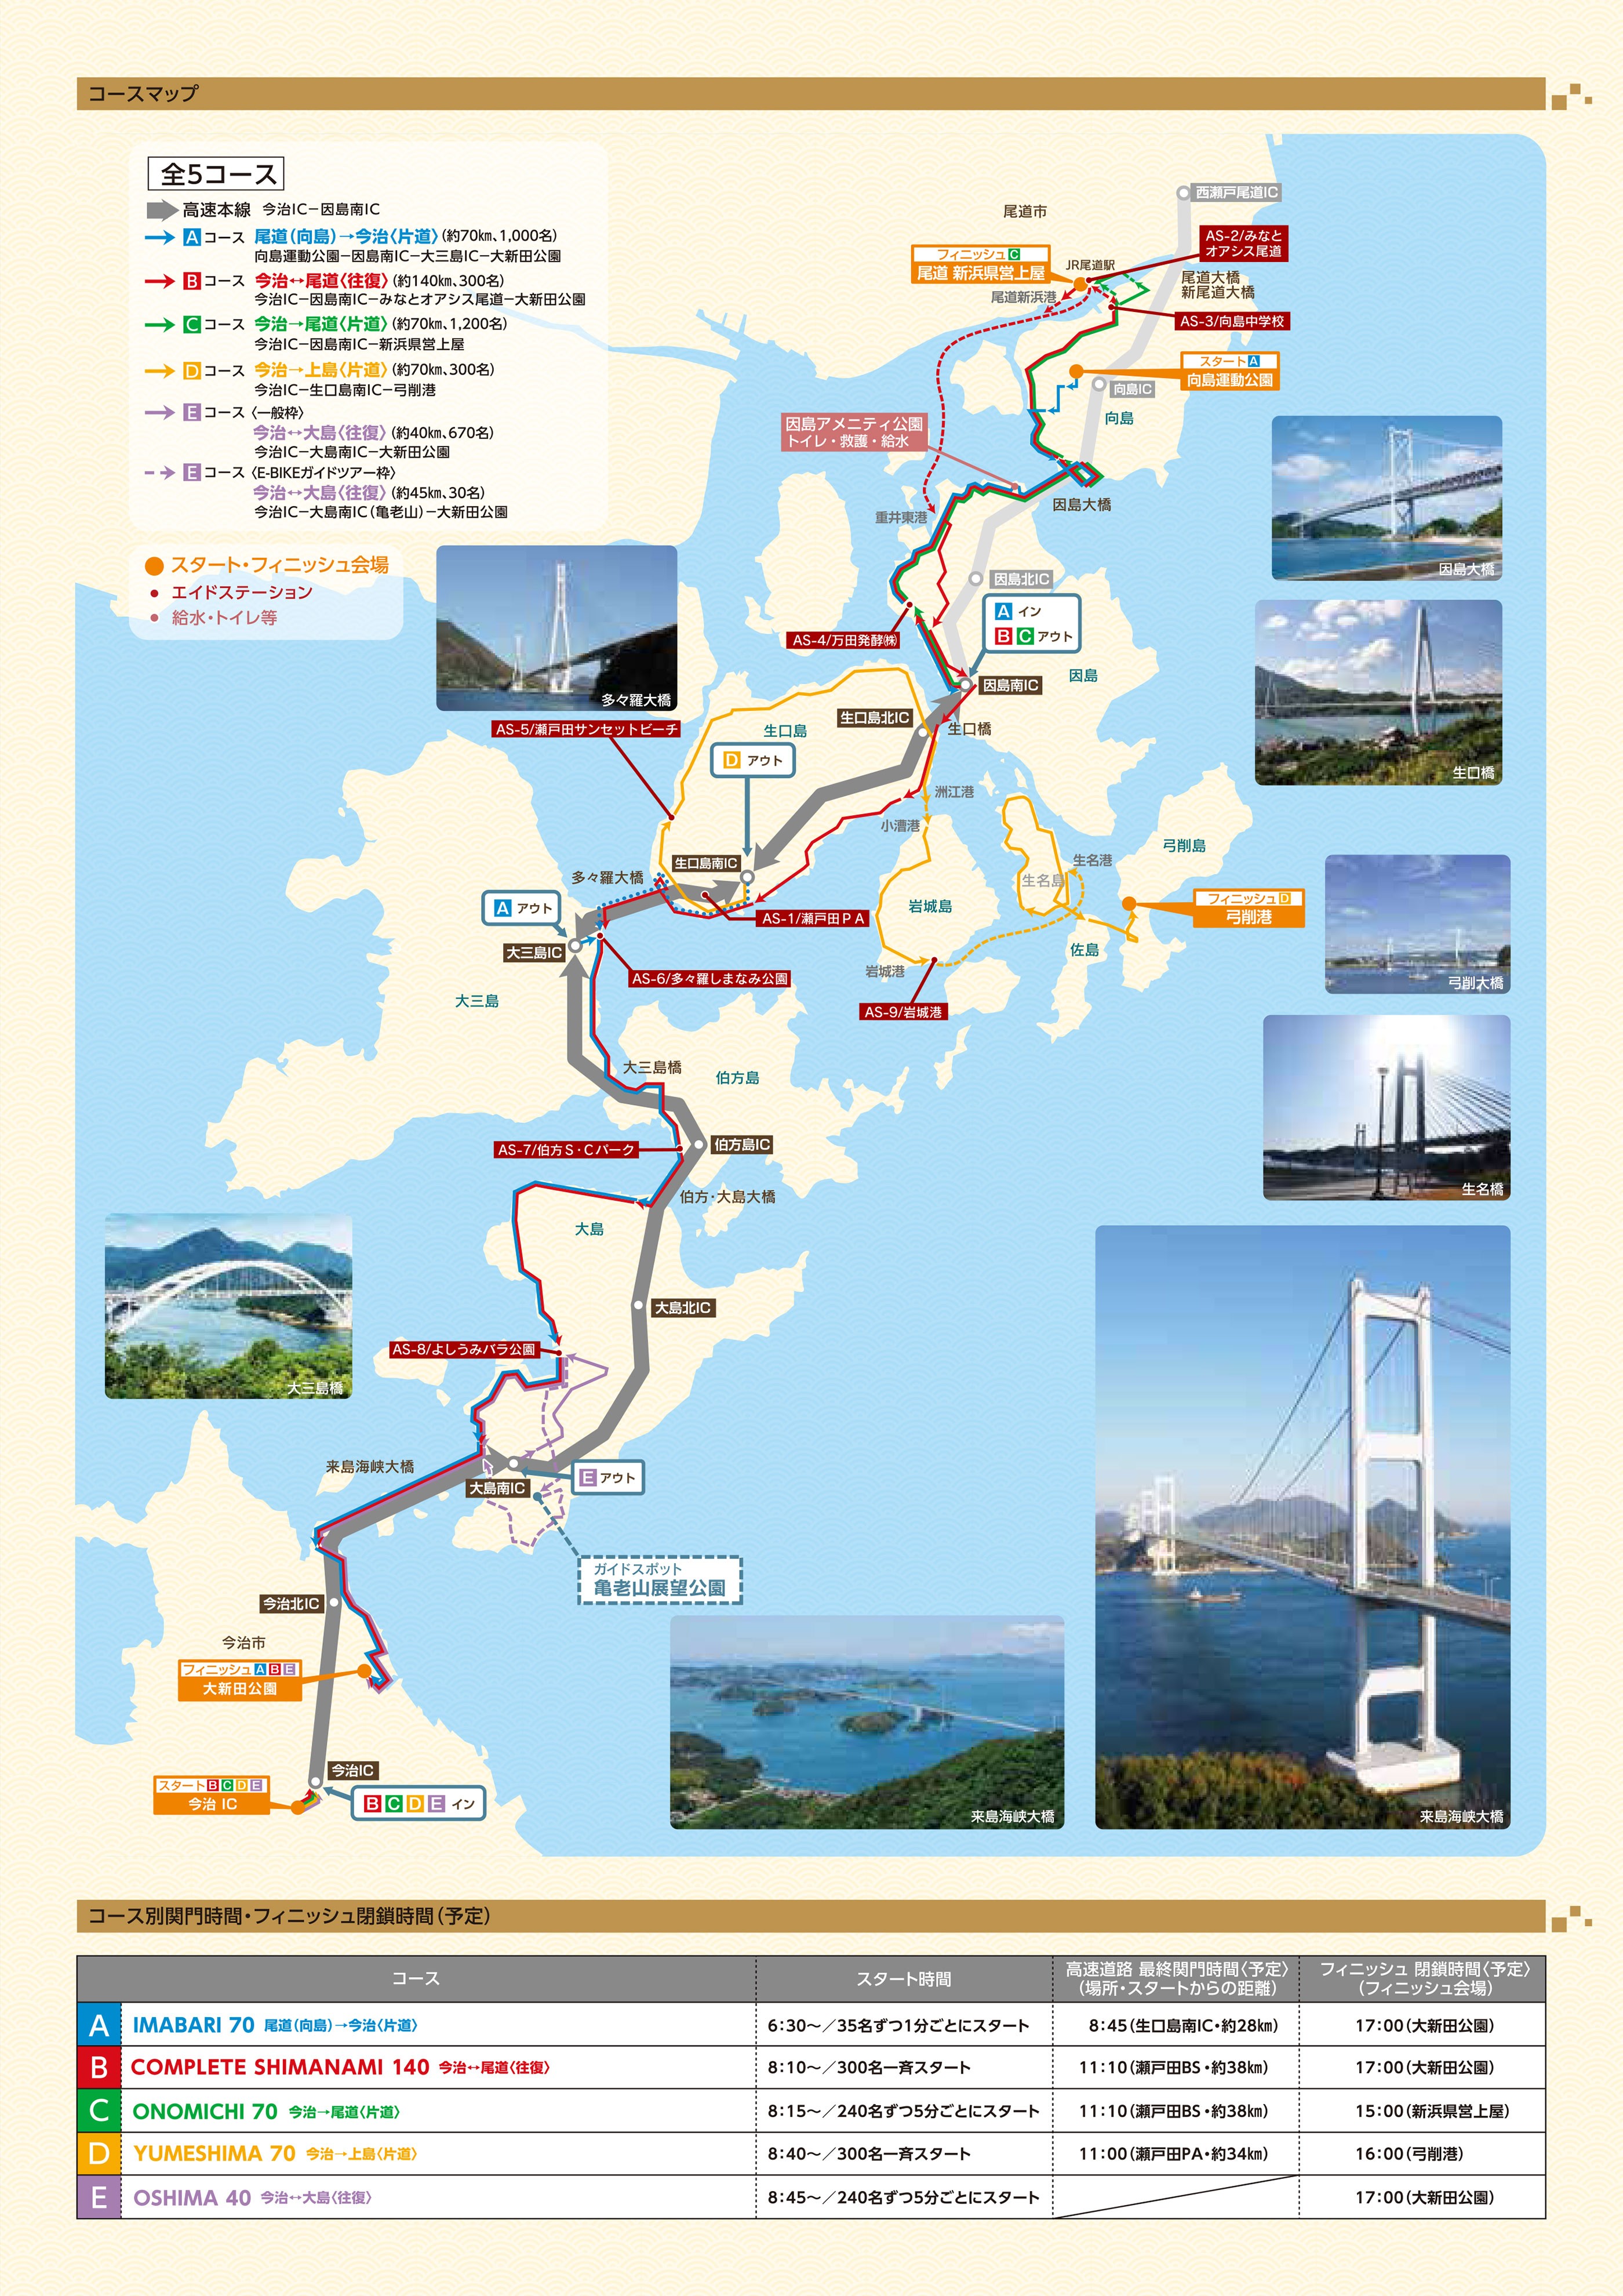 圖片出處：2020年島波海道單車節官網 https://cycling-shimanami.jp/course.html 